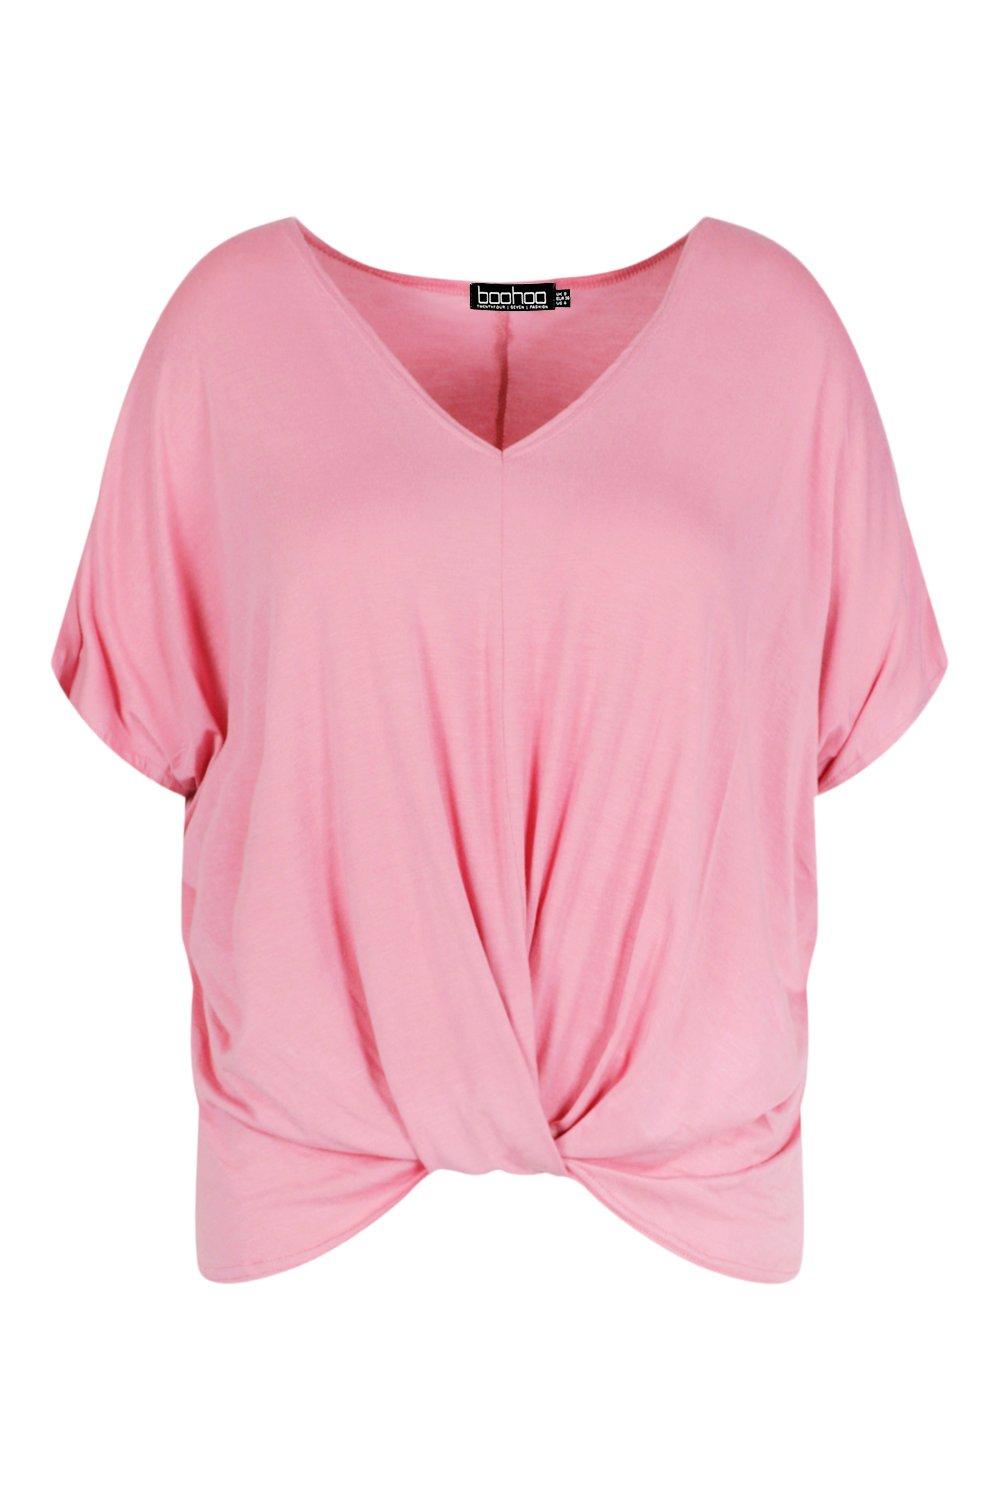 boohoo Plus Oversized T-Shirt - Pink - Size 20